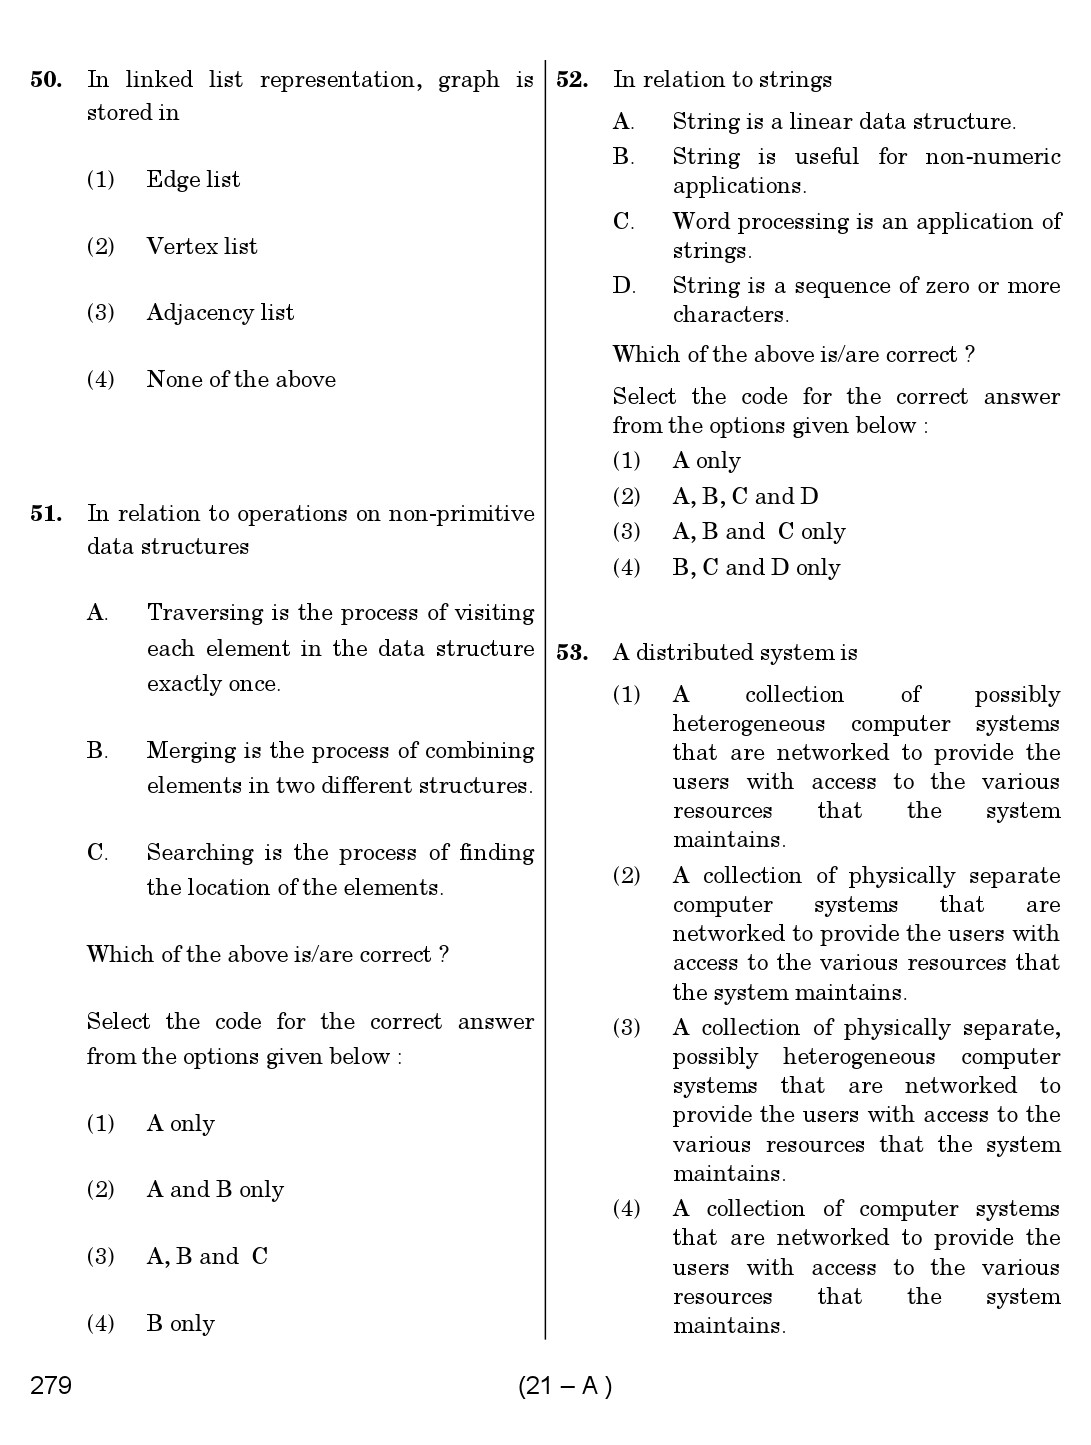 Karnataka PSC Computer Science Teachers Exam Sample Question Paper Subject code 279 21